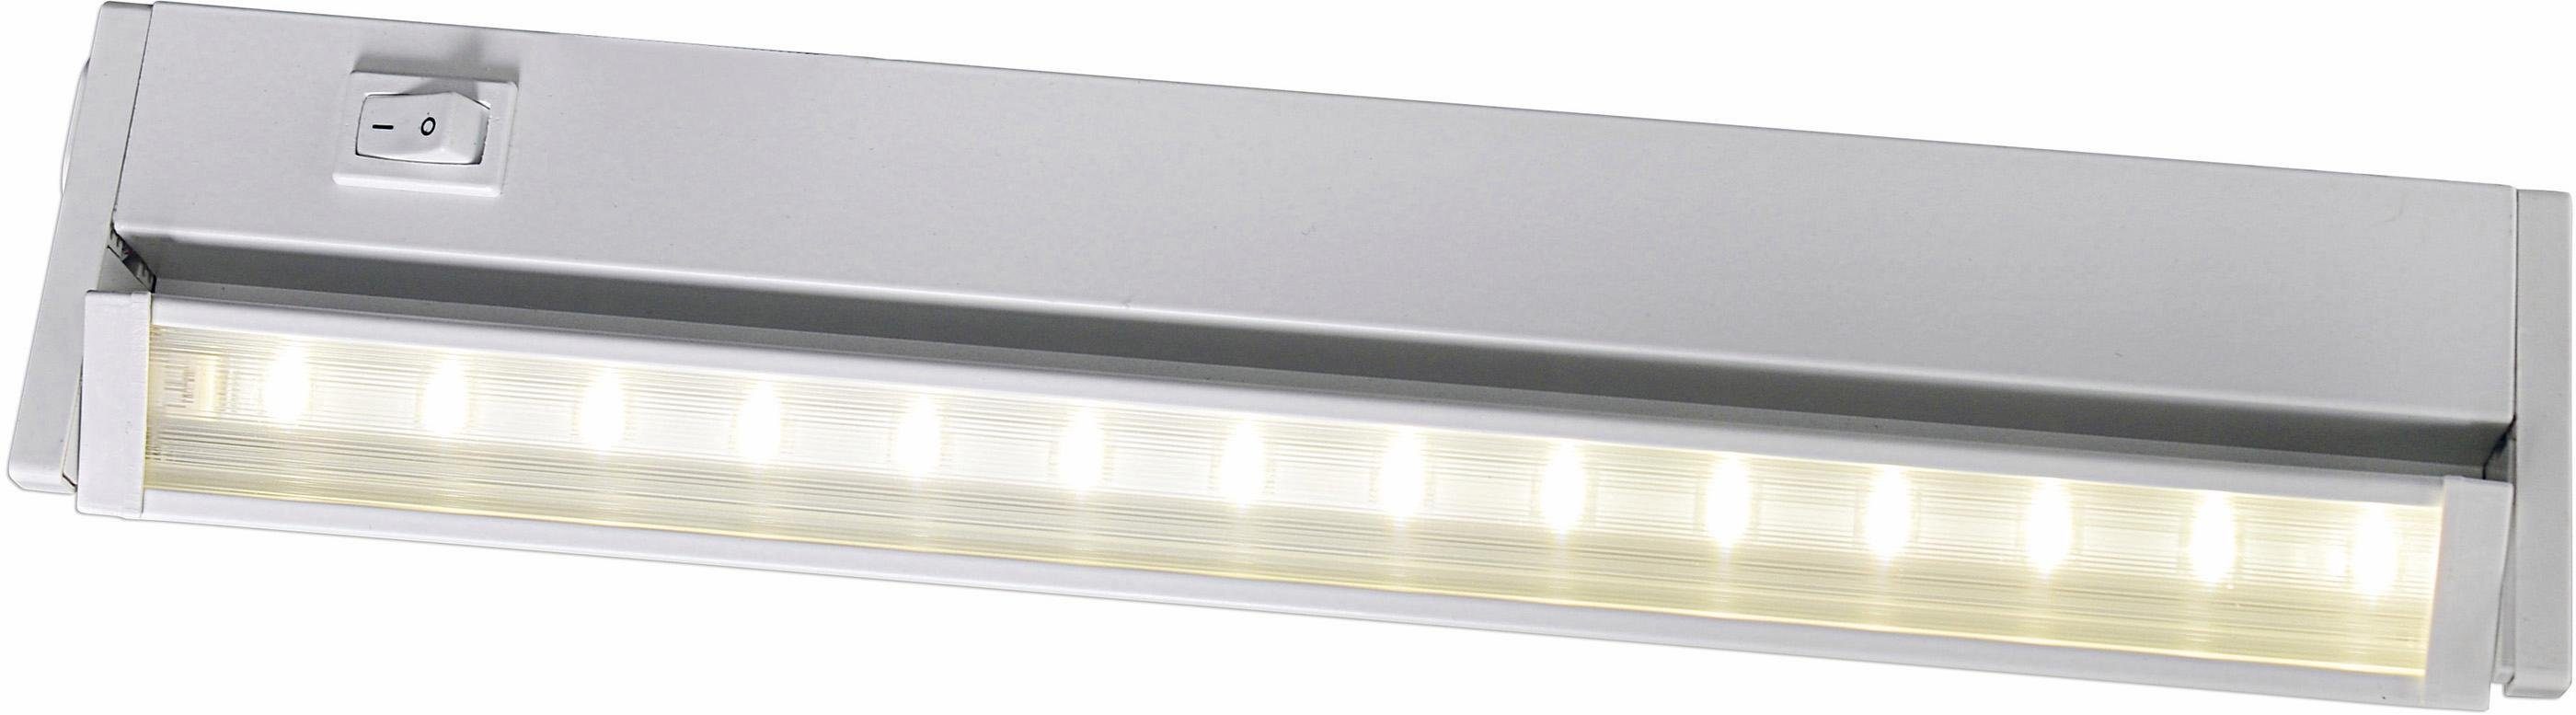 LED fest Neutralweiß, Lichtleiste integriert, 14 total 3W näve LED Möbelunterbauleuchte, FUNCTION, 5050SMD